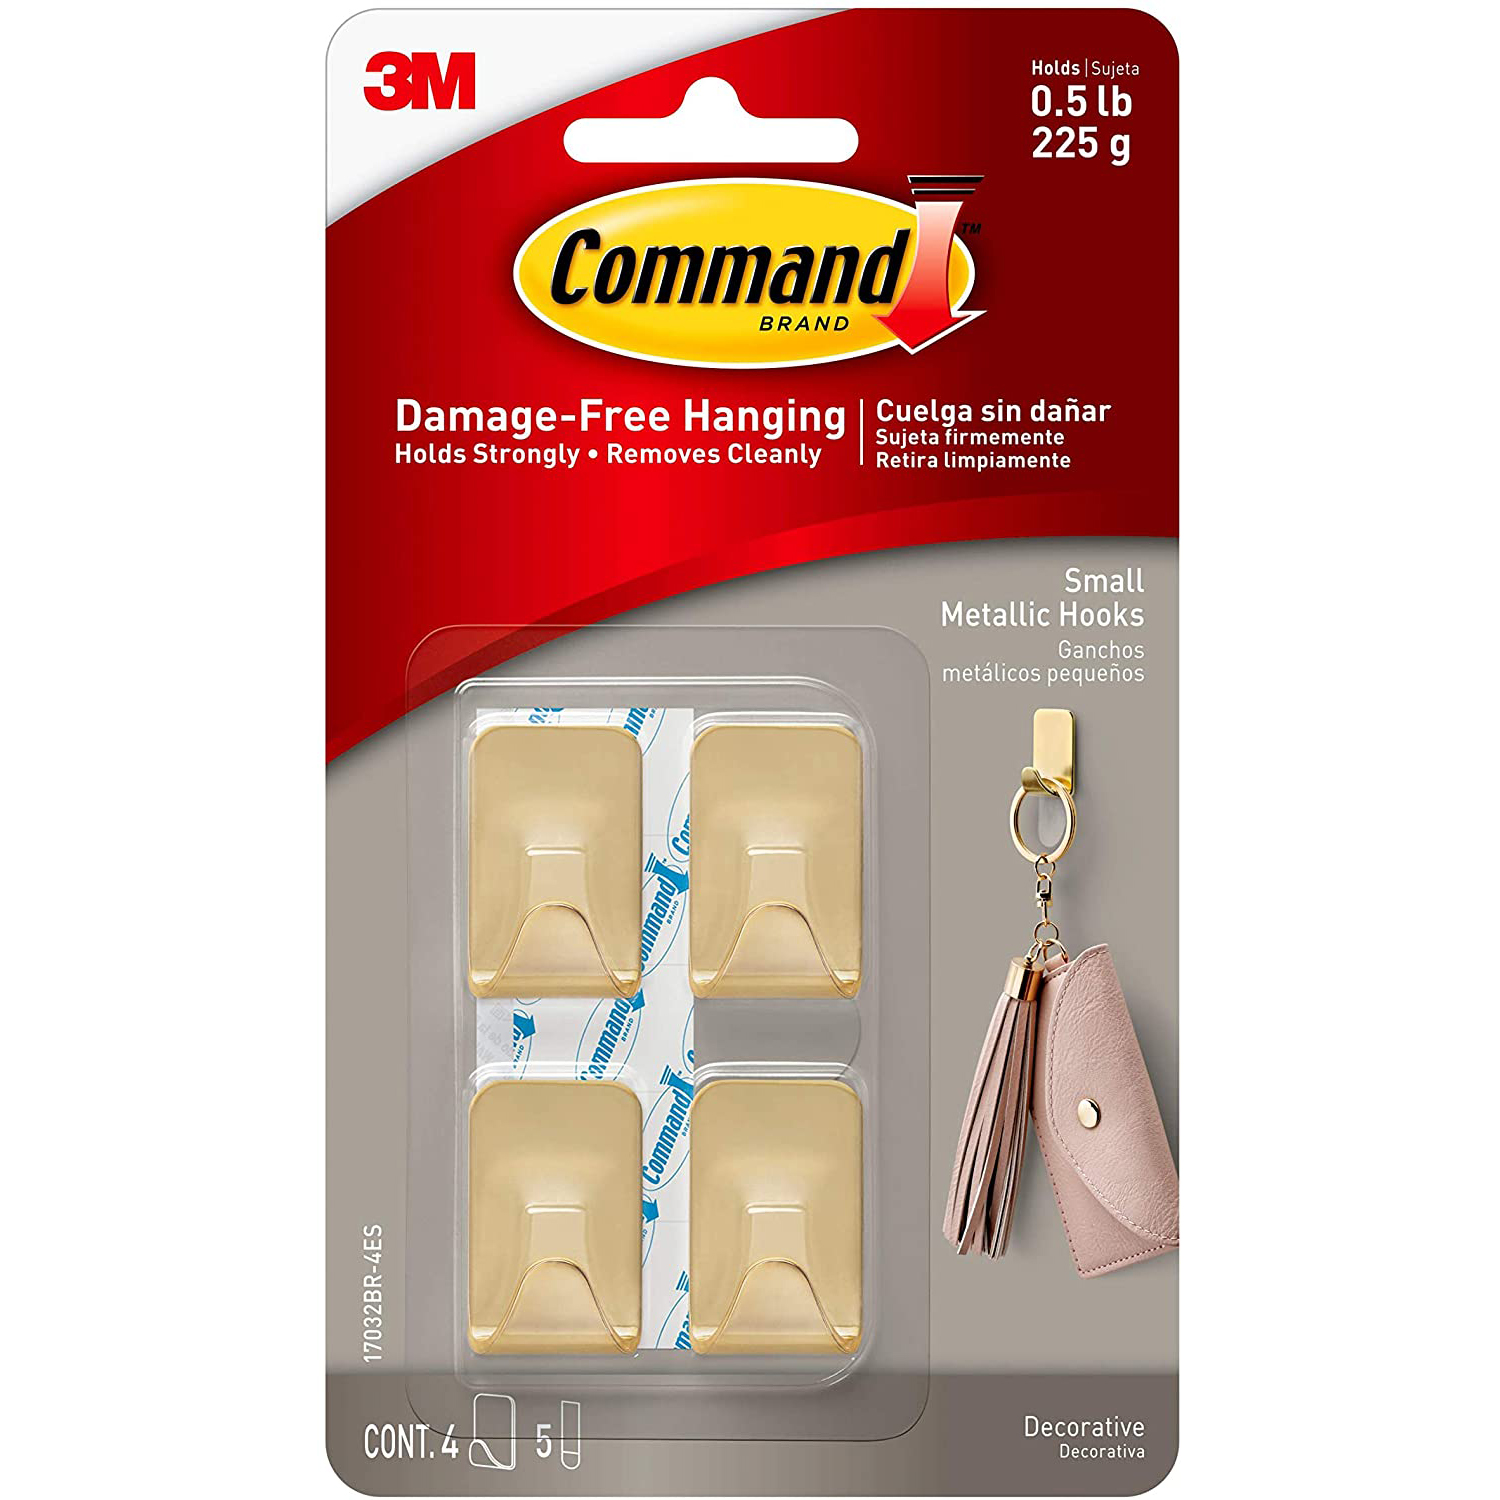 Command Small Metallic Hooks [Removable]